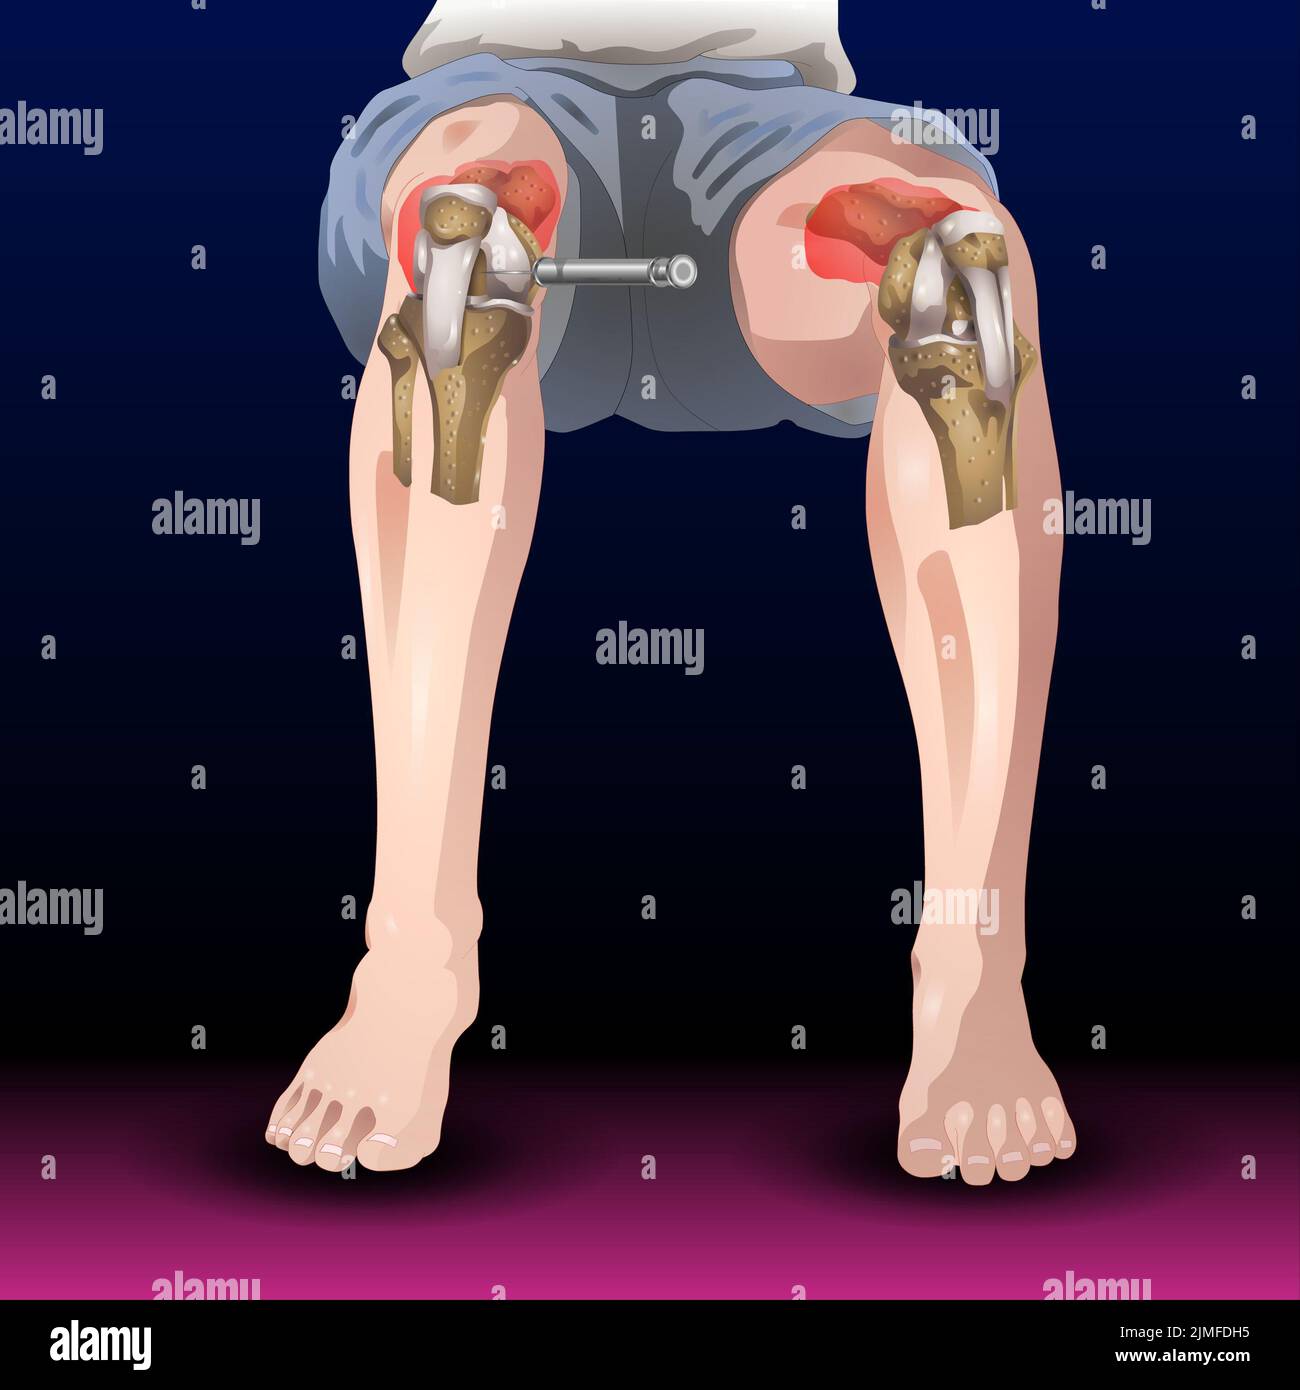 Bones Pain, Injury and Inflammation, Knee Joint Pain Silhouette Icon Ache of Knee, Leg Skeleton, Arthritis, Osteoporosis and Bones Joint, Illustration Stock Photo